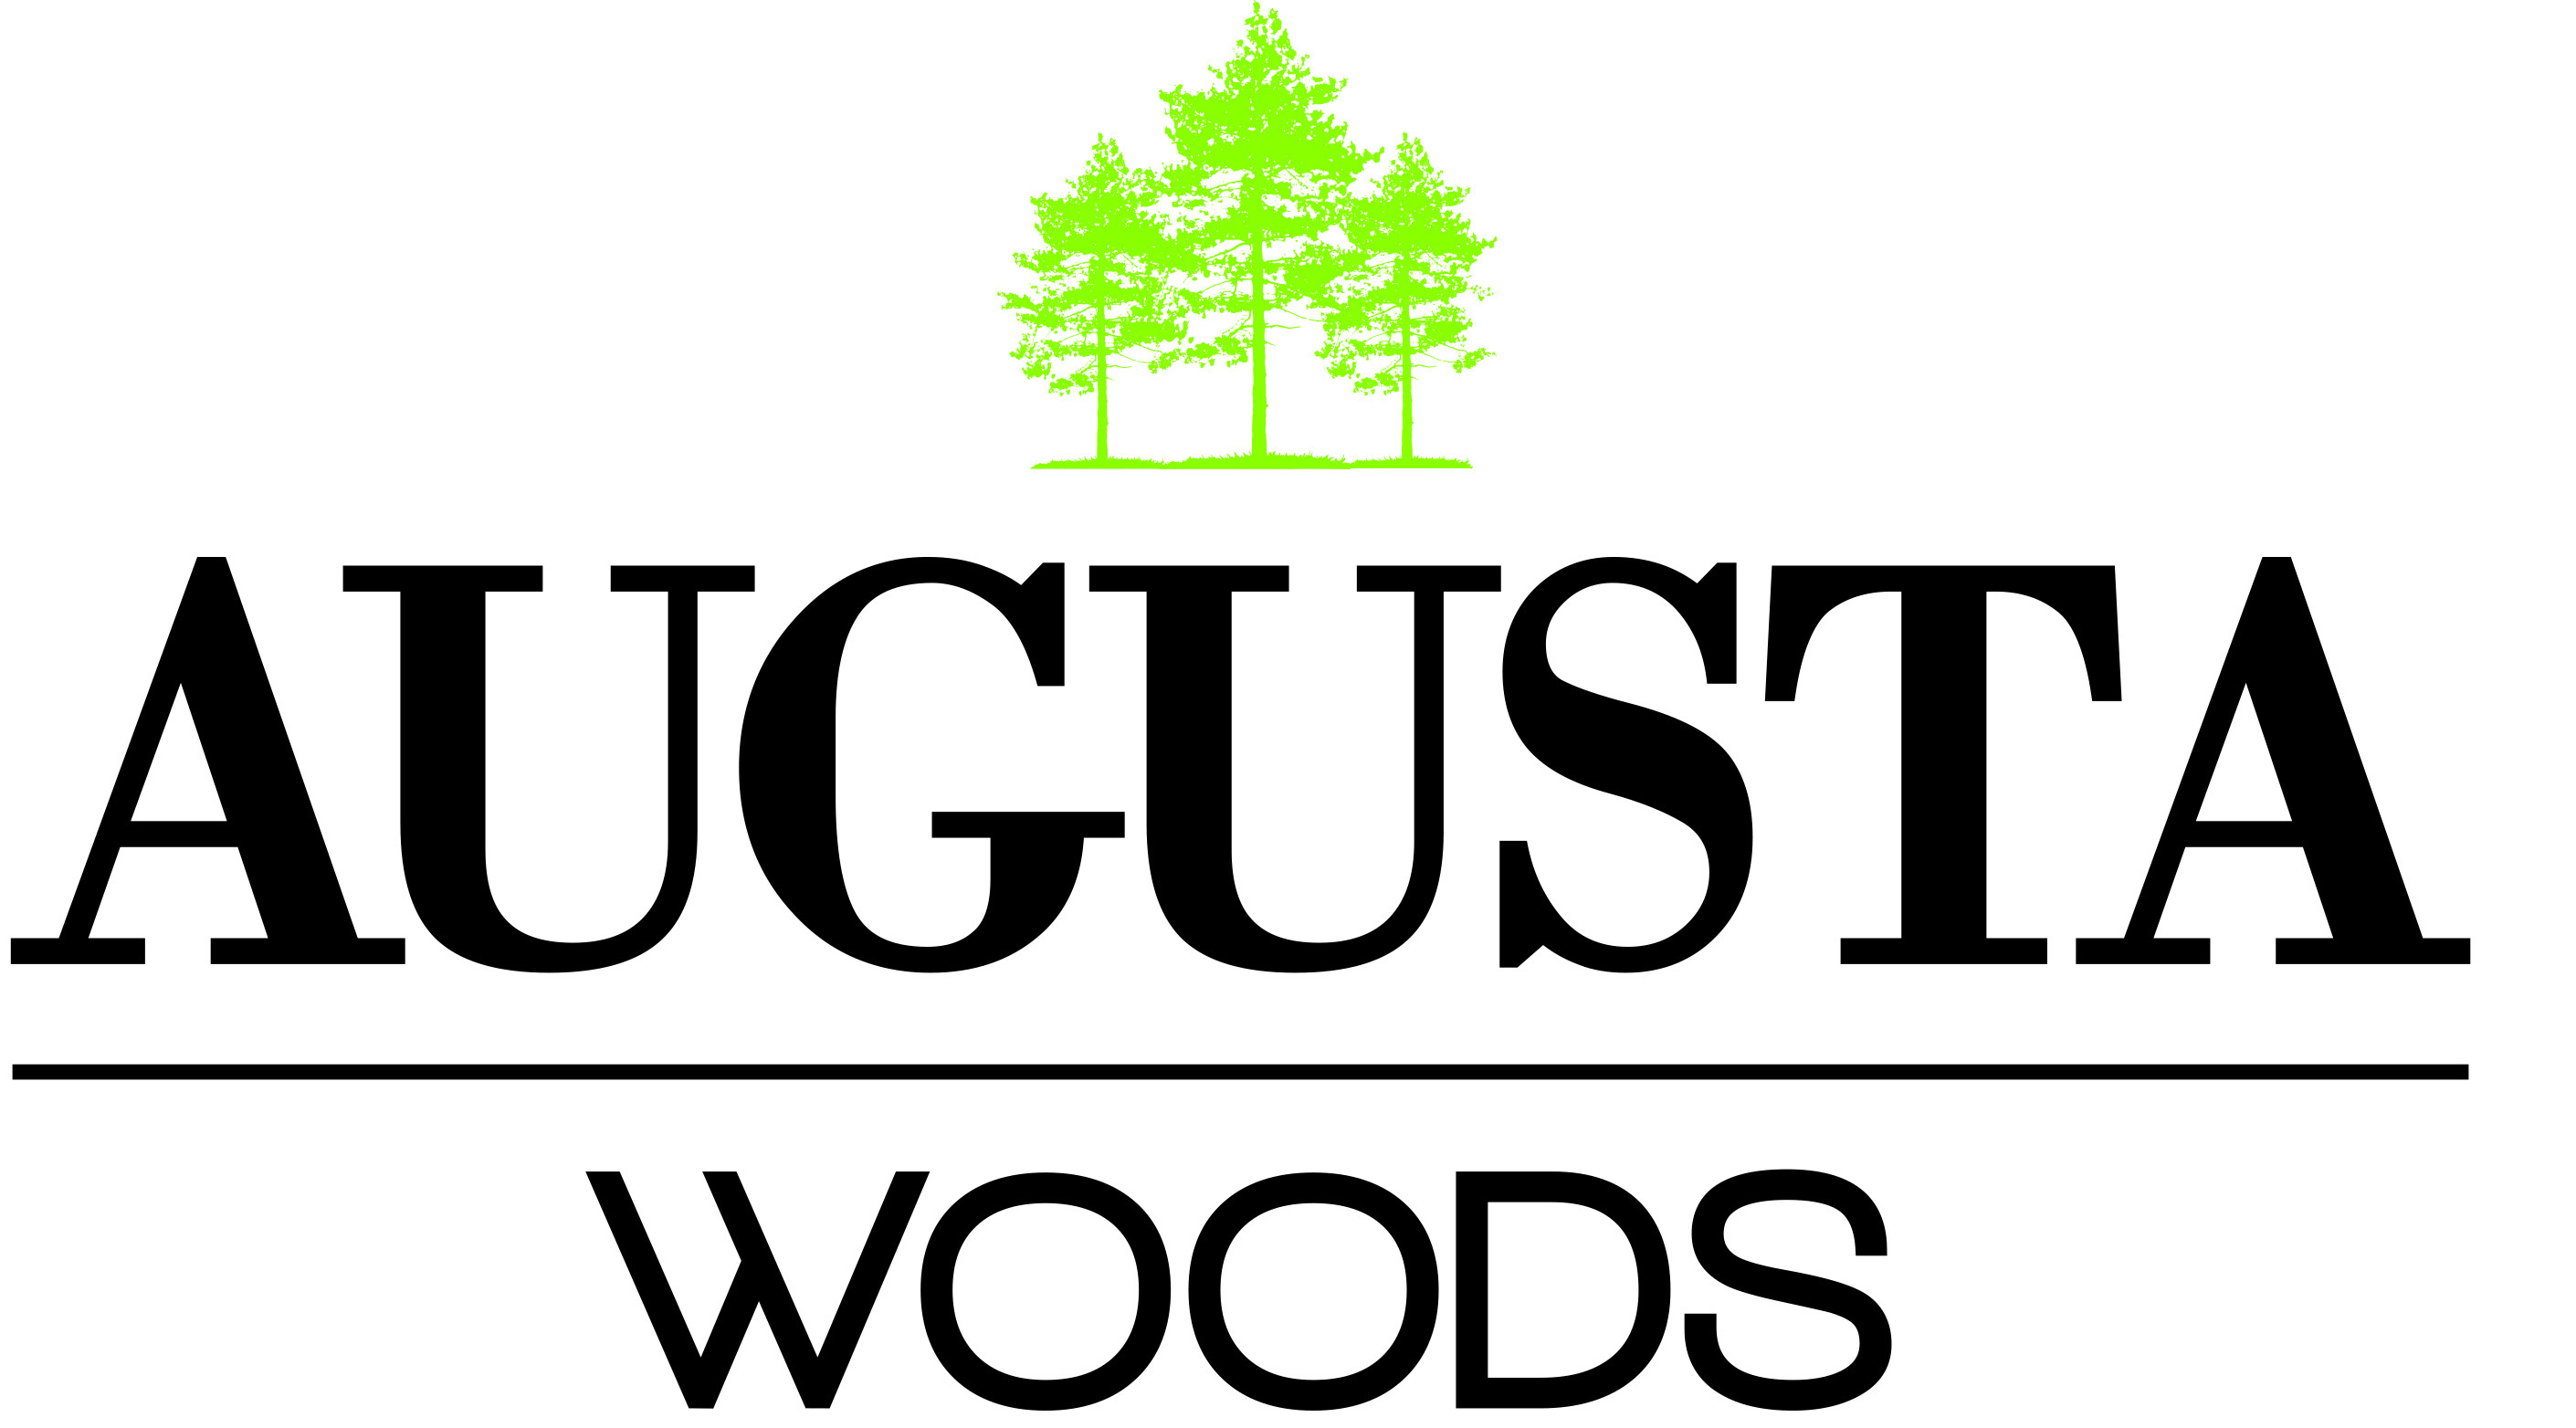 Augusta Woods